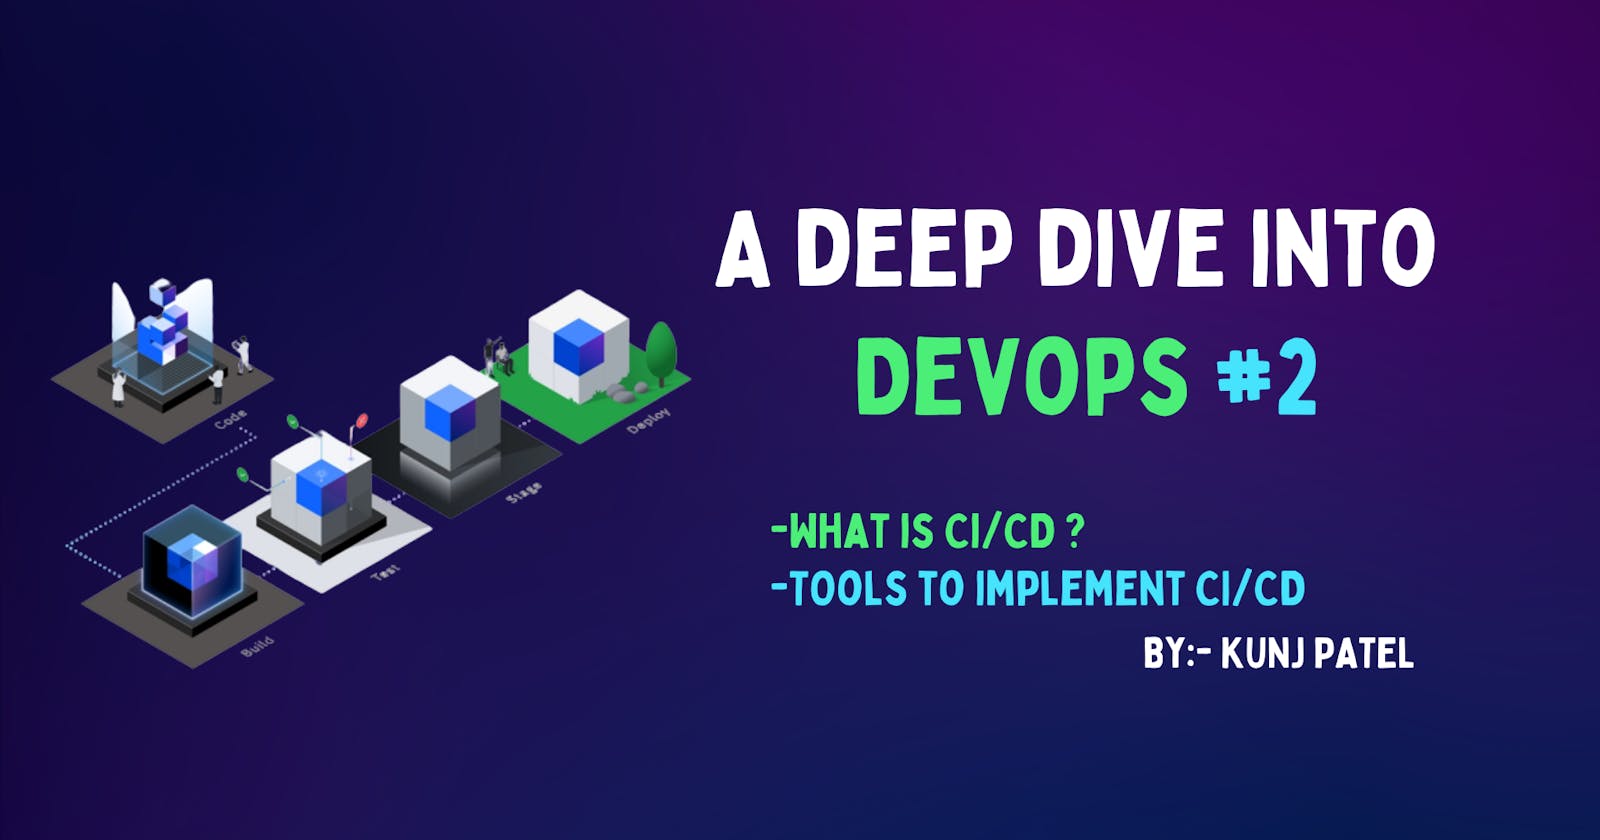 A Deep dive into DevOps #2